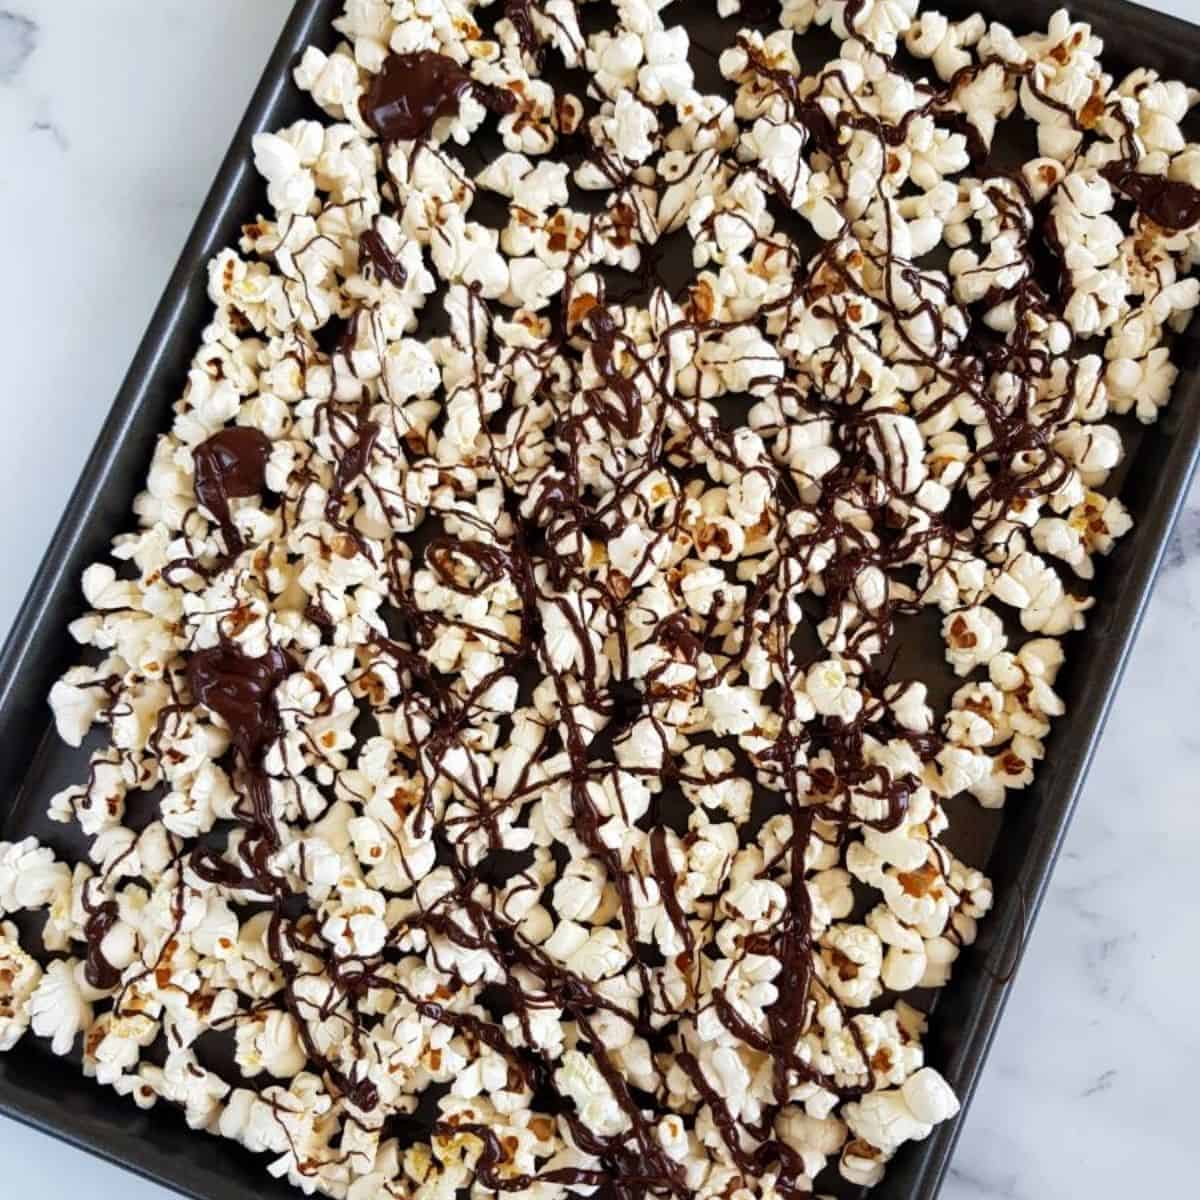 popcorn and chocolate